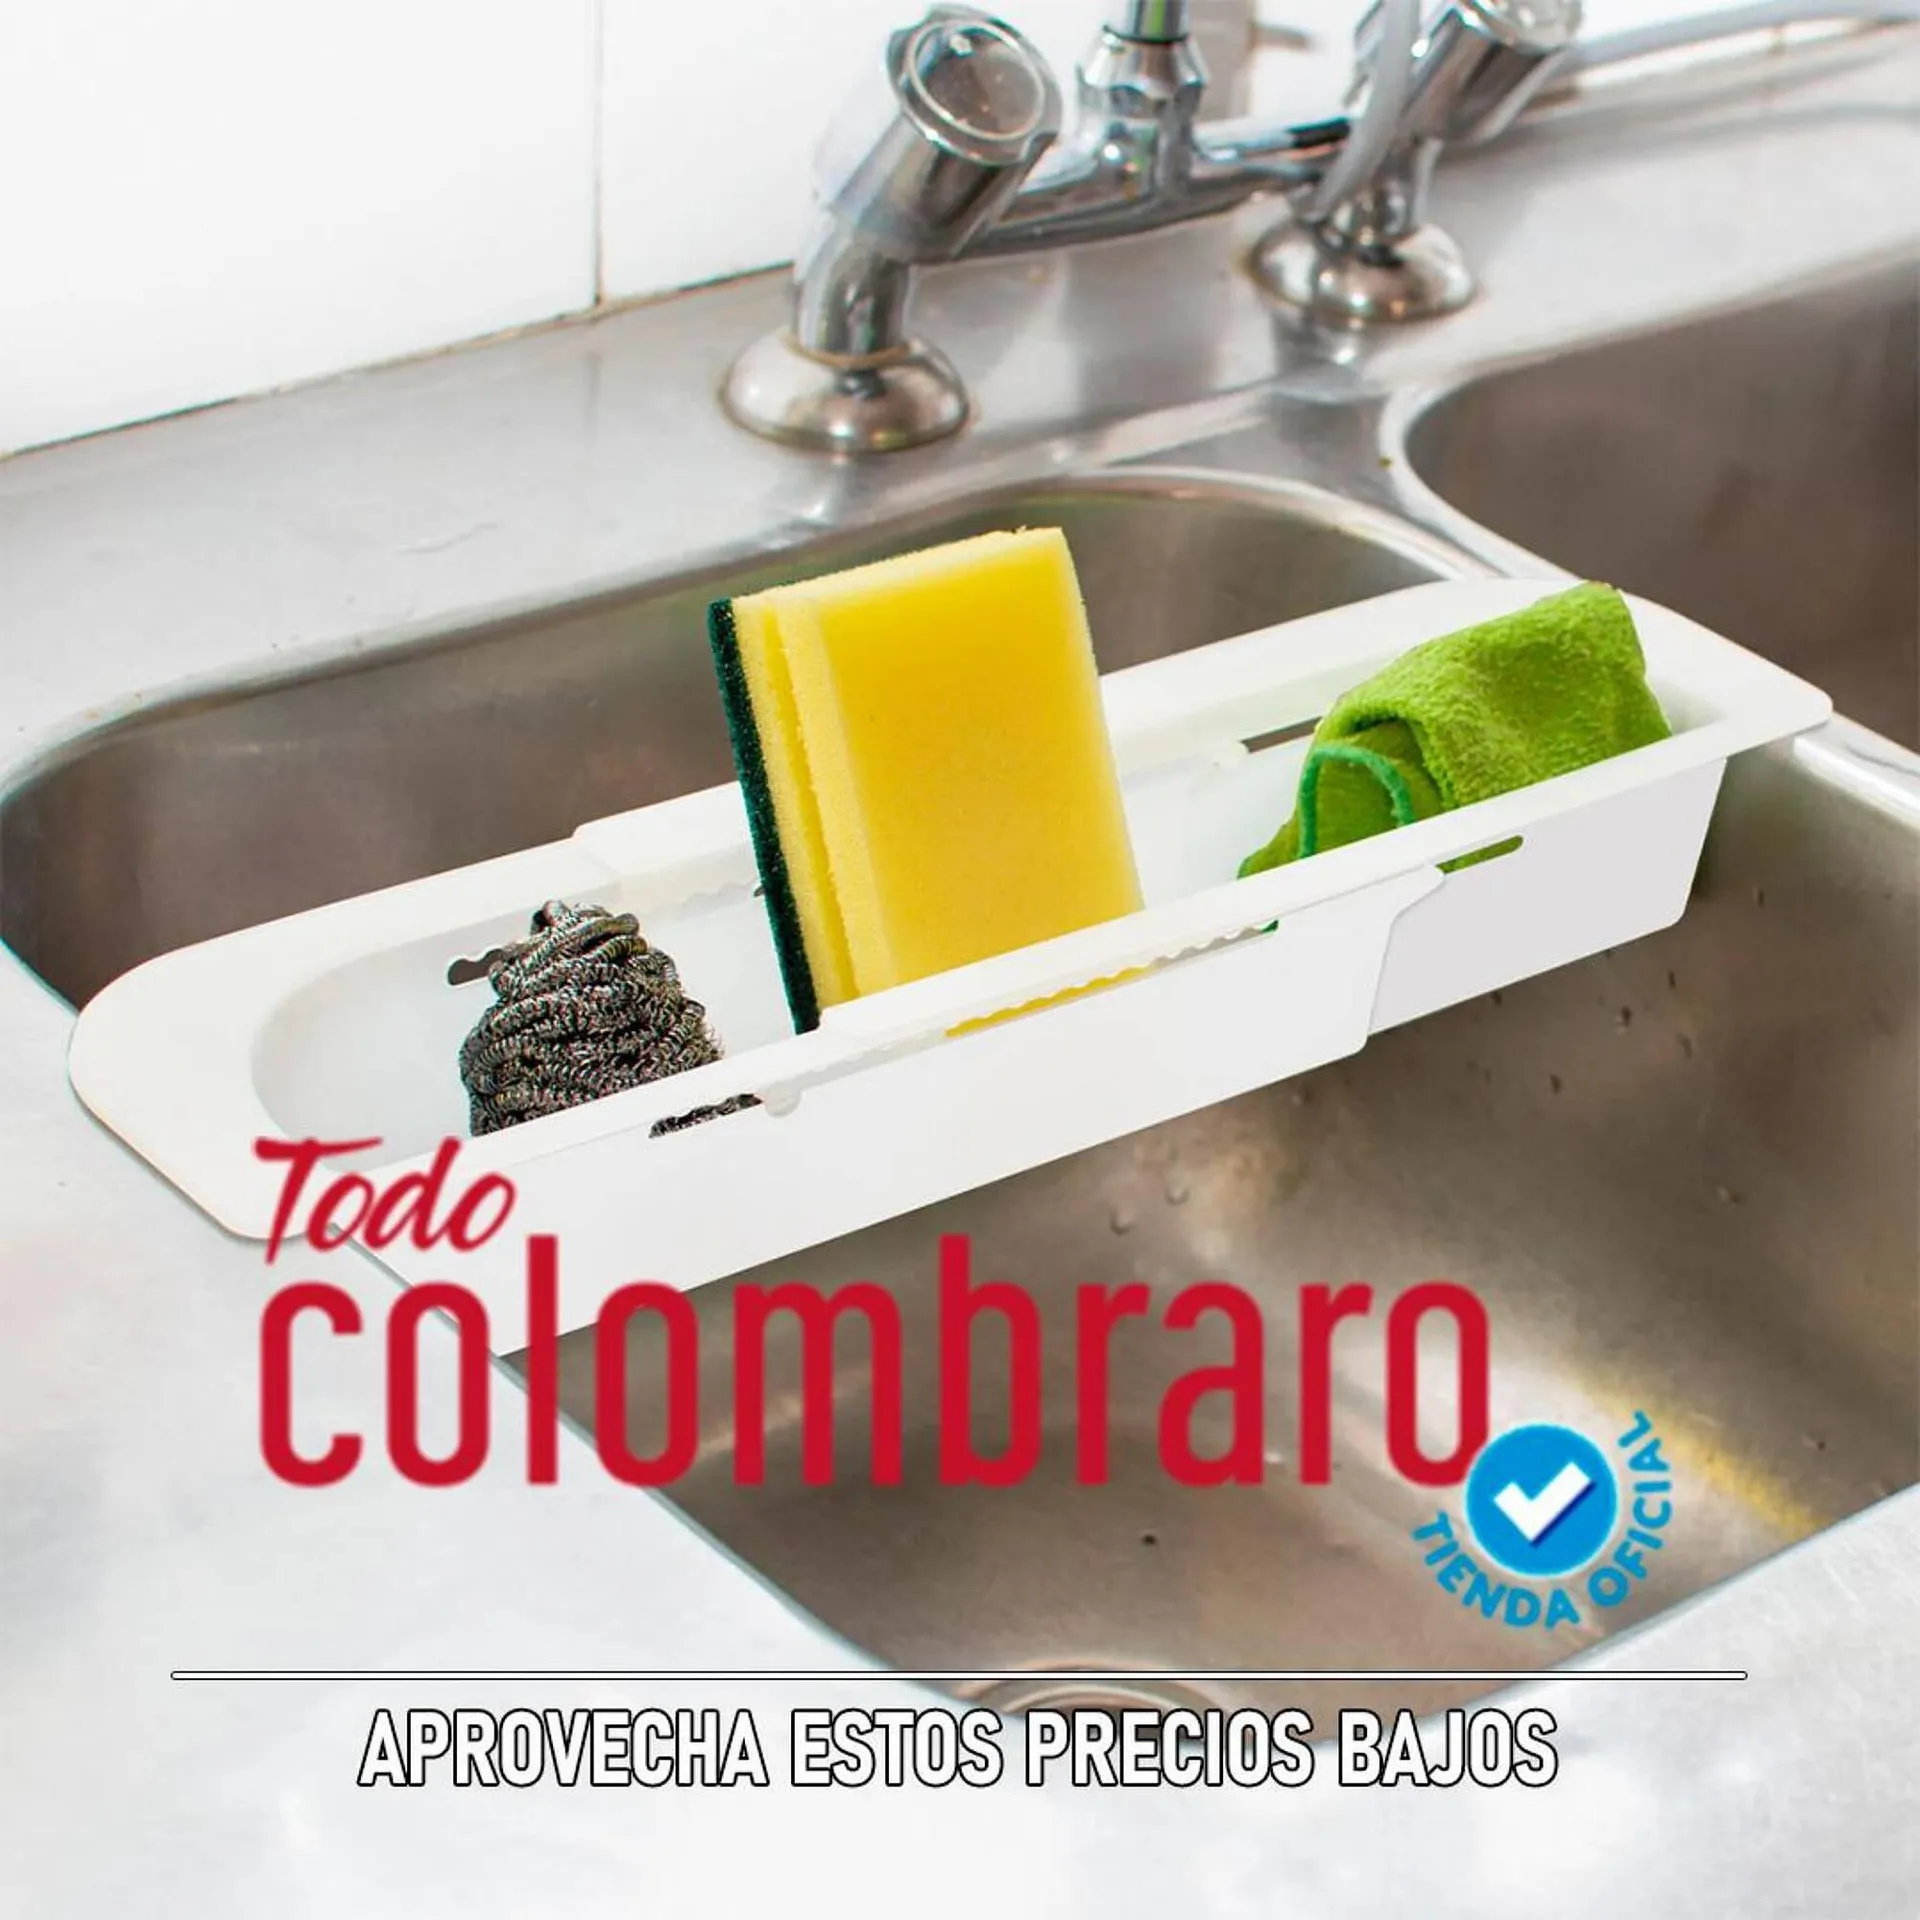 TODO COLOMBRARO